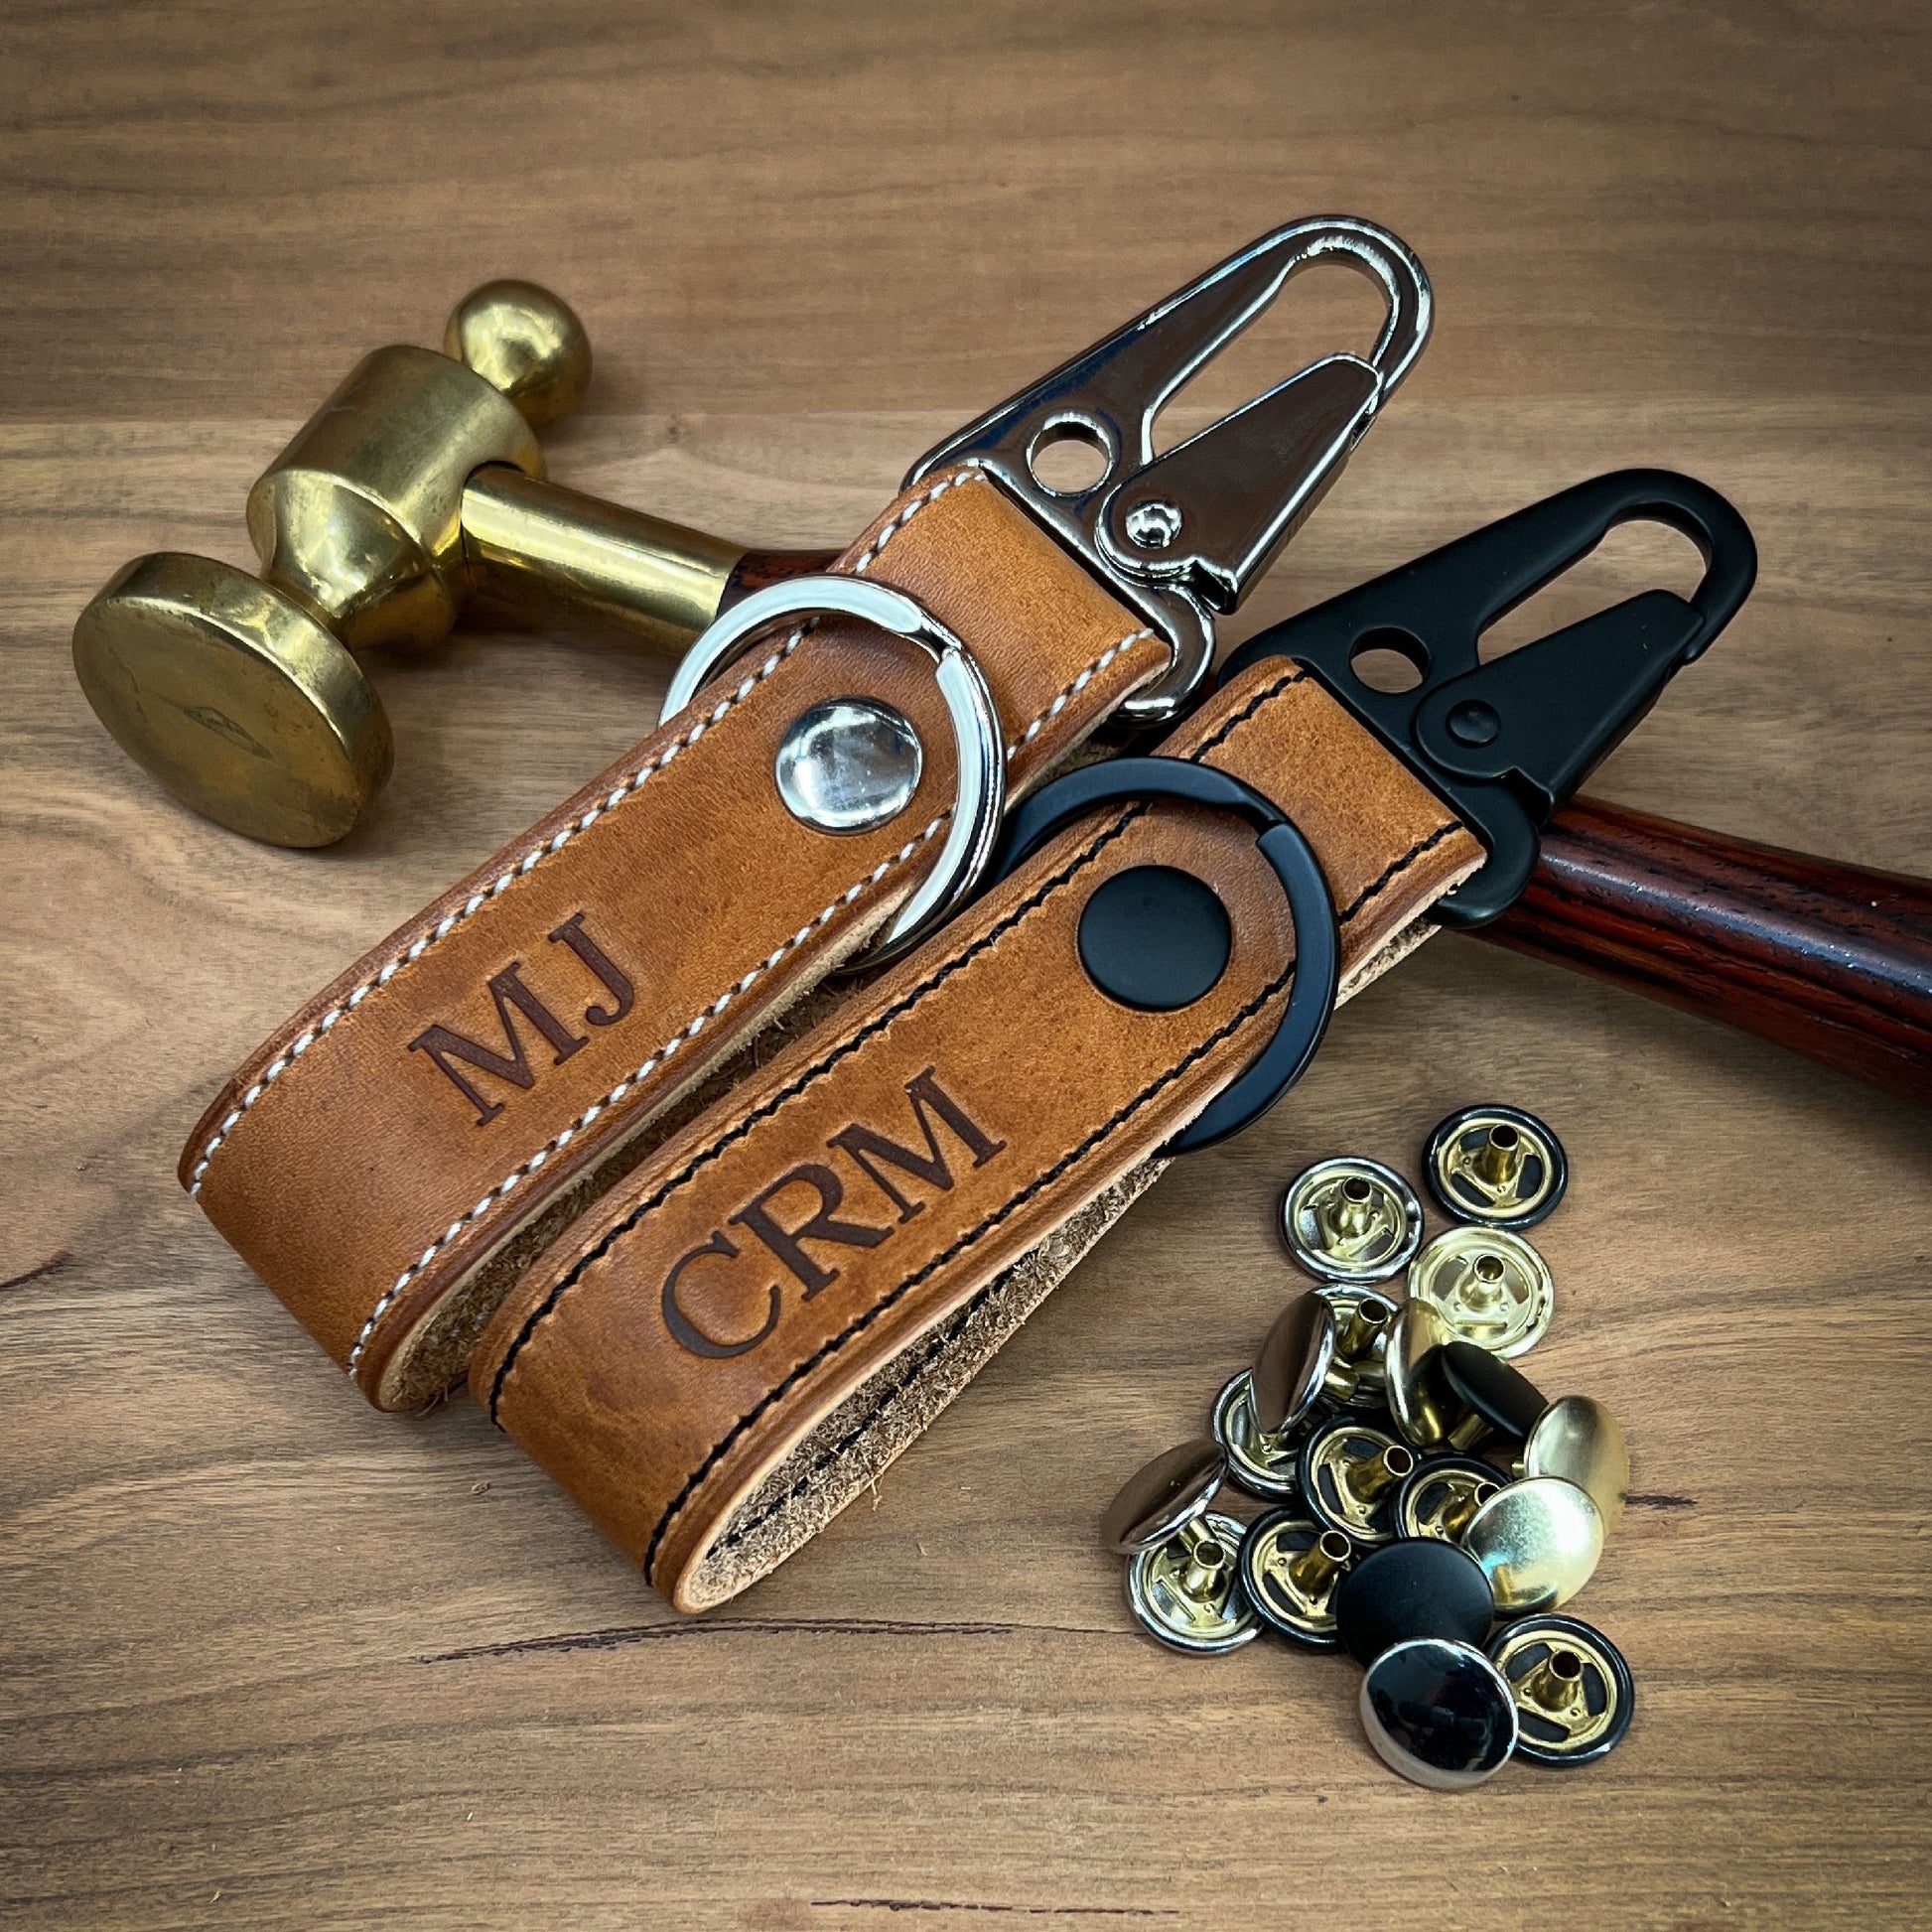 CustomLeatherAndPen Horween Leather Belt Loop Keychain | Handmade to Order in Houston, TX Nickel